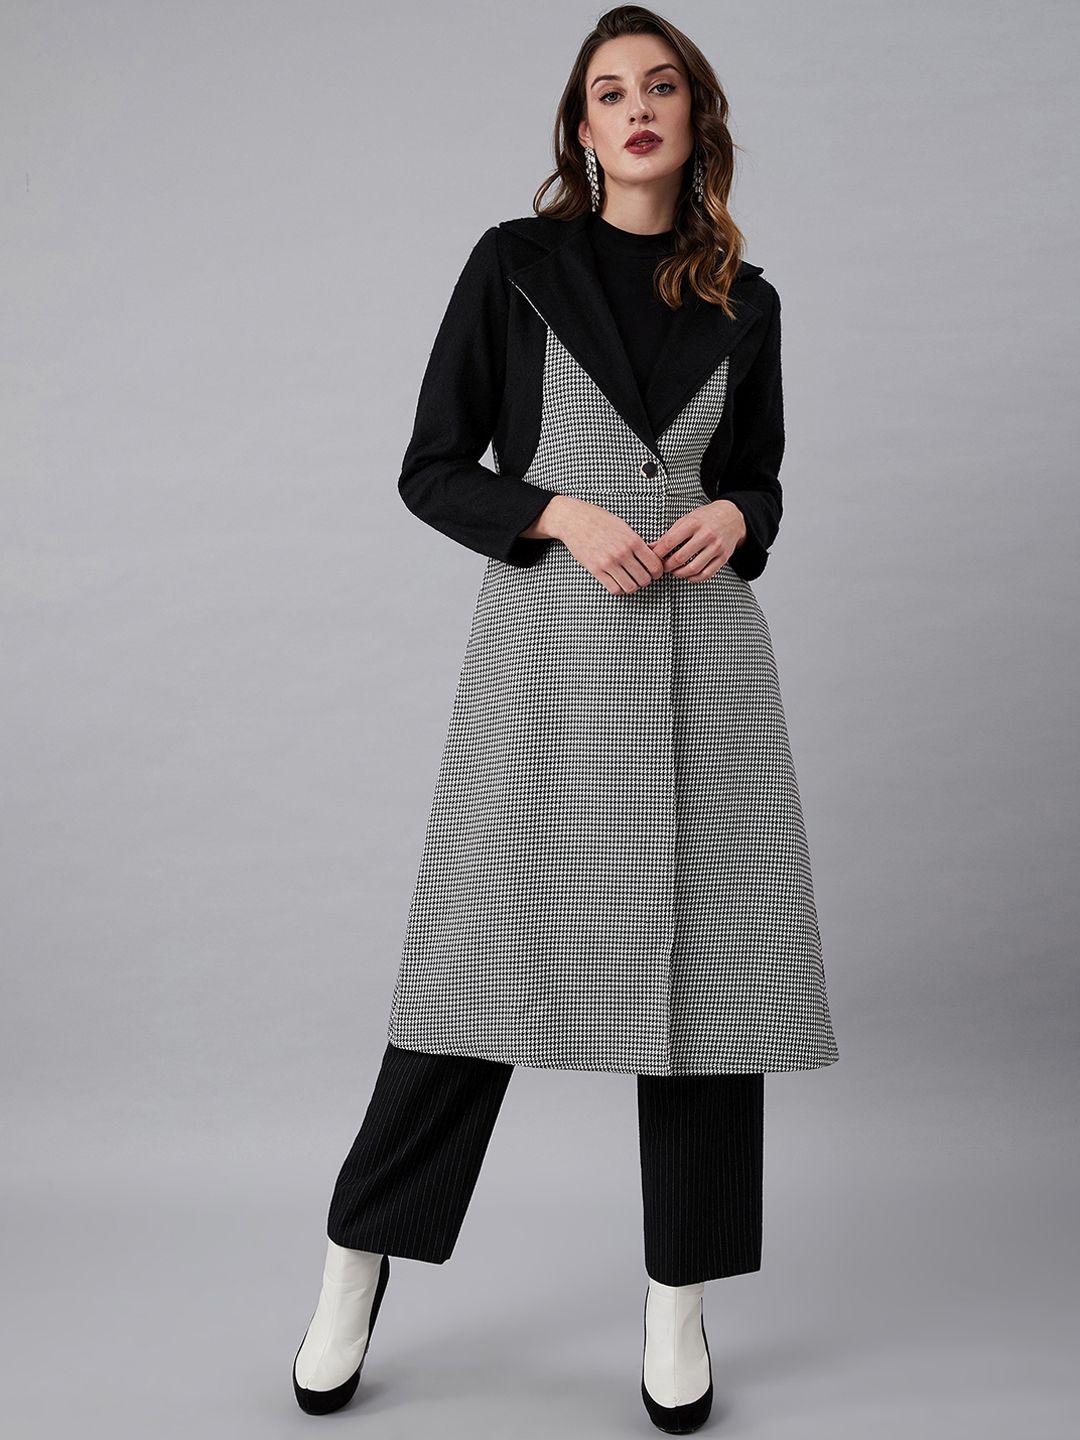 athena-women-black-&-white-houndstooth-patterned-longline-wool-overcoat